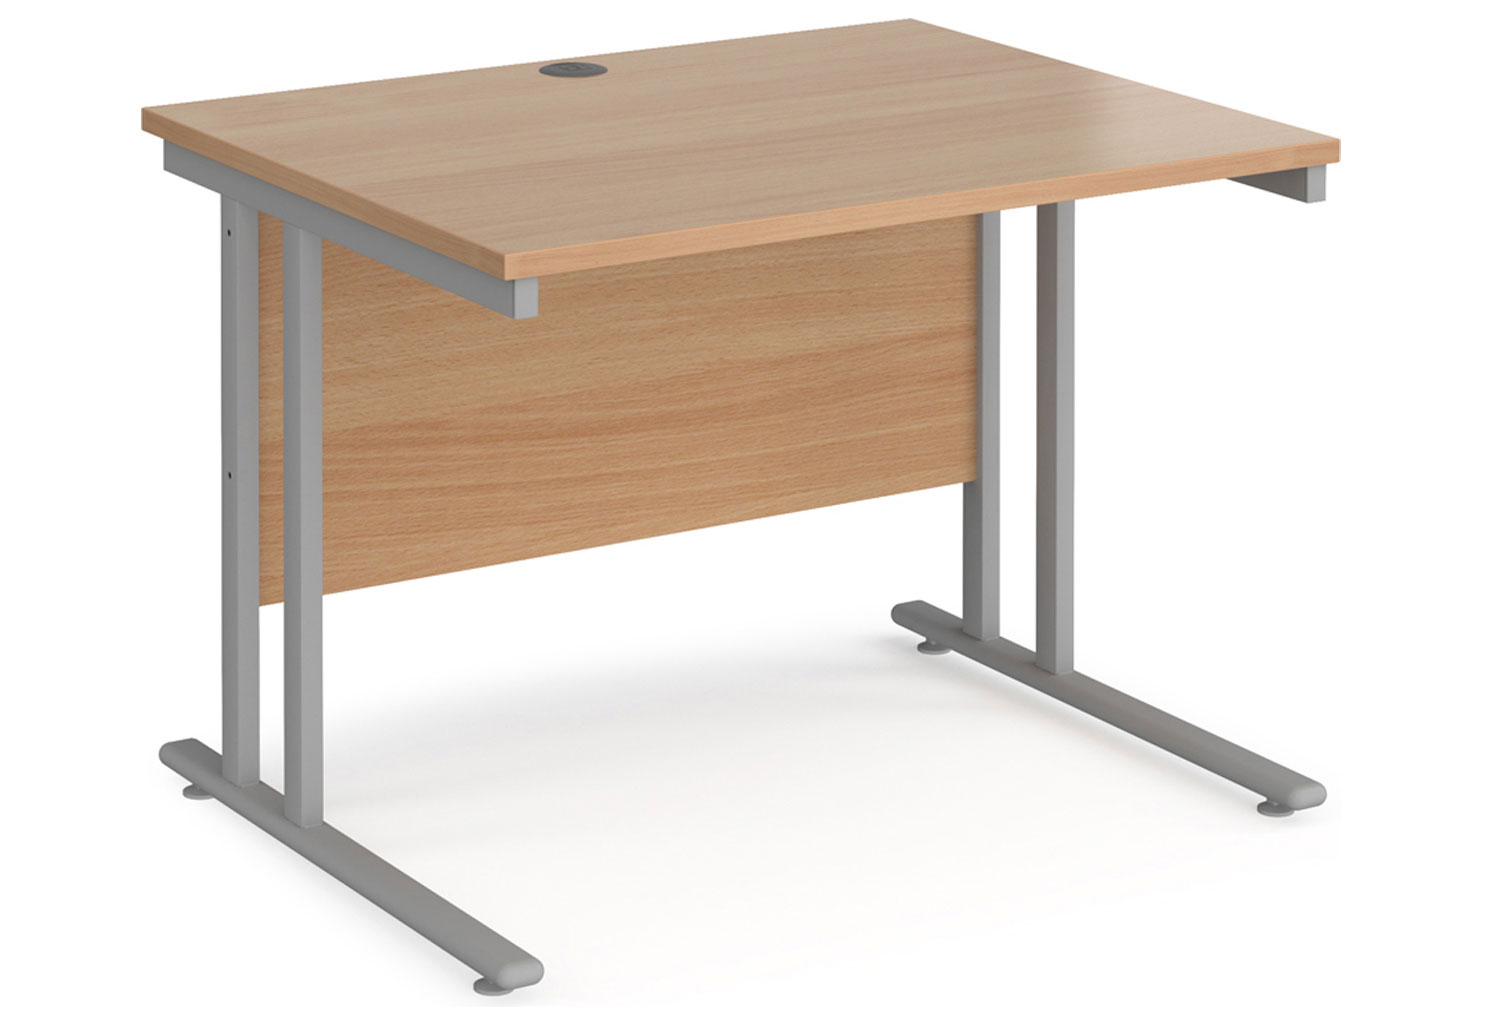 Value Line Deluxe C-Leg Rectangular Office Desk (Silver Legs), 100wx80dx73h (cm), Beech, Express Delivery